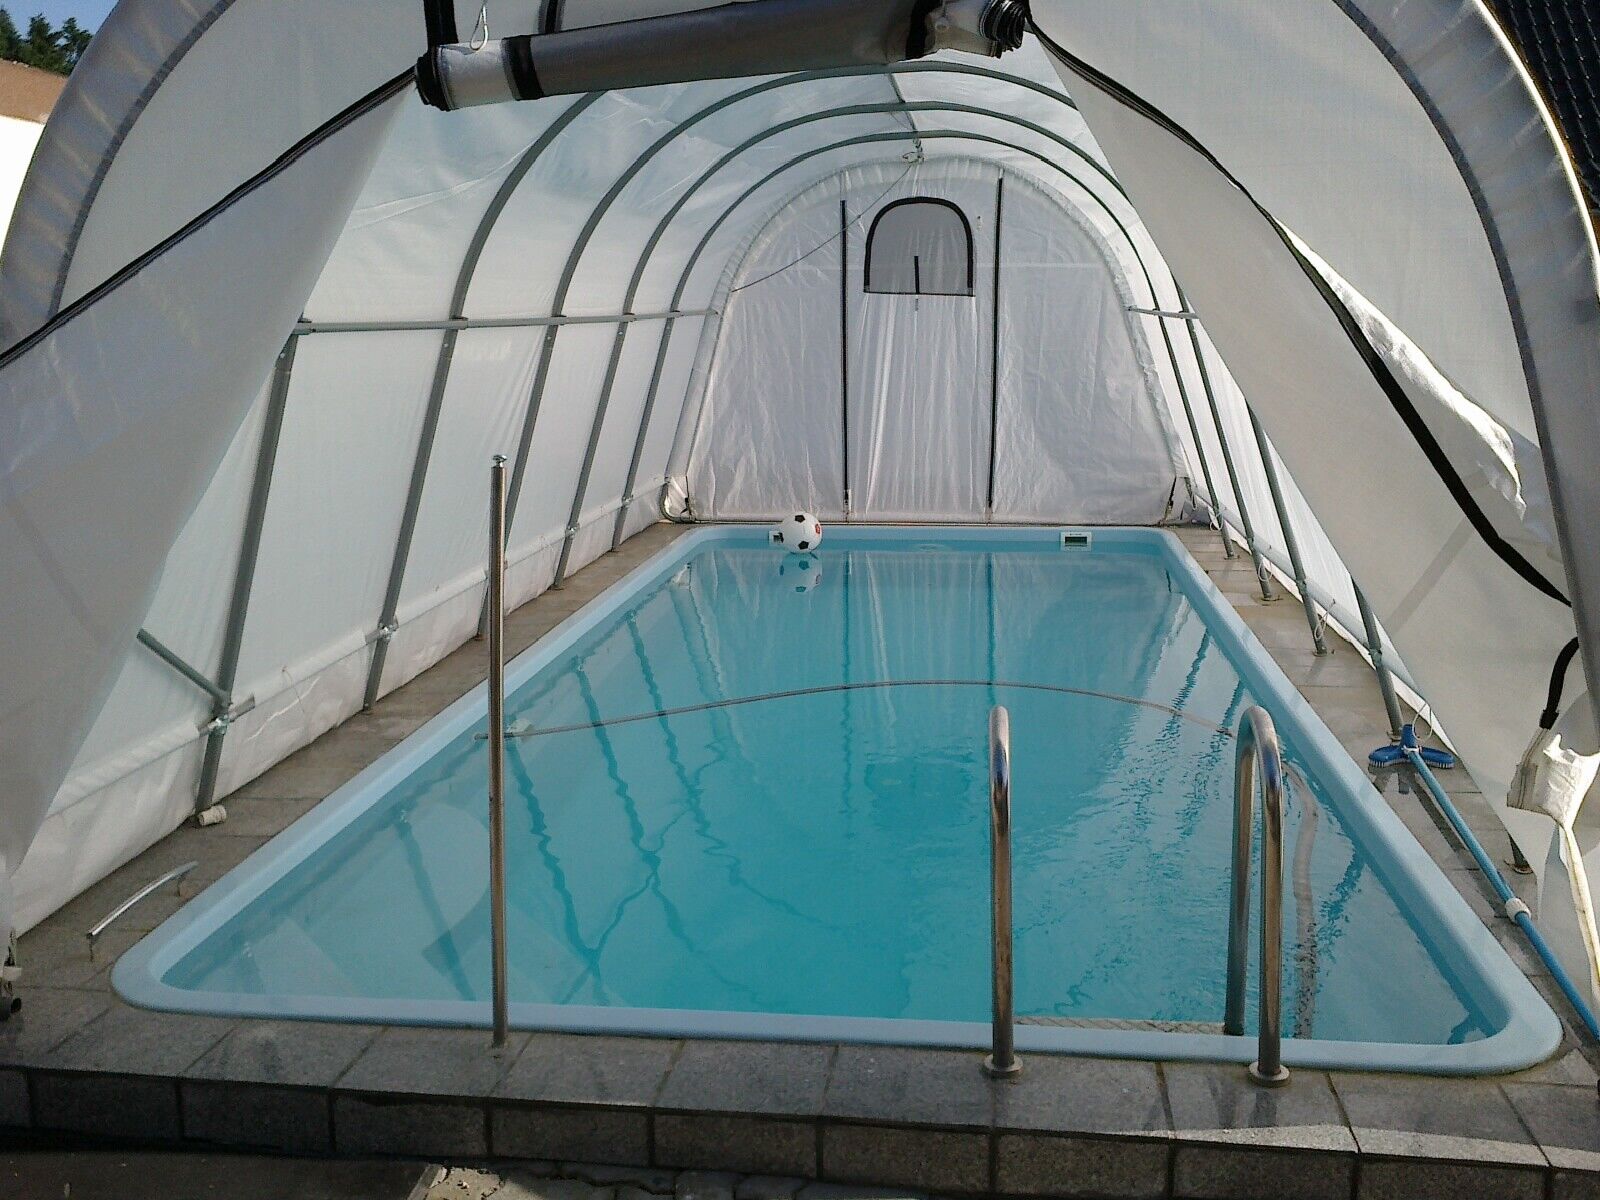 Schwimmbad Überdachung 7,3m x 3,7m Poolüberdachung Pool Zeltdach Whirlpool Dach